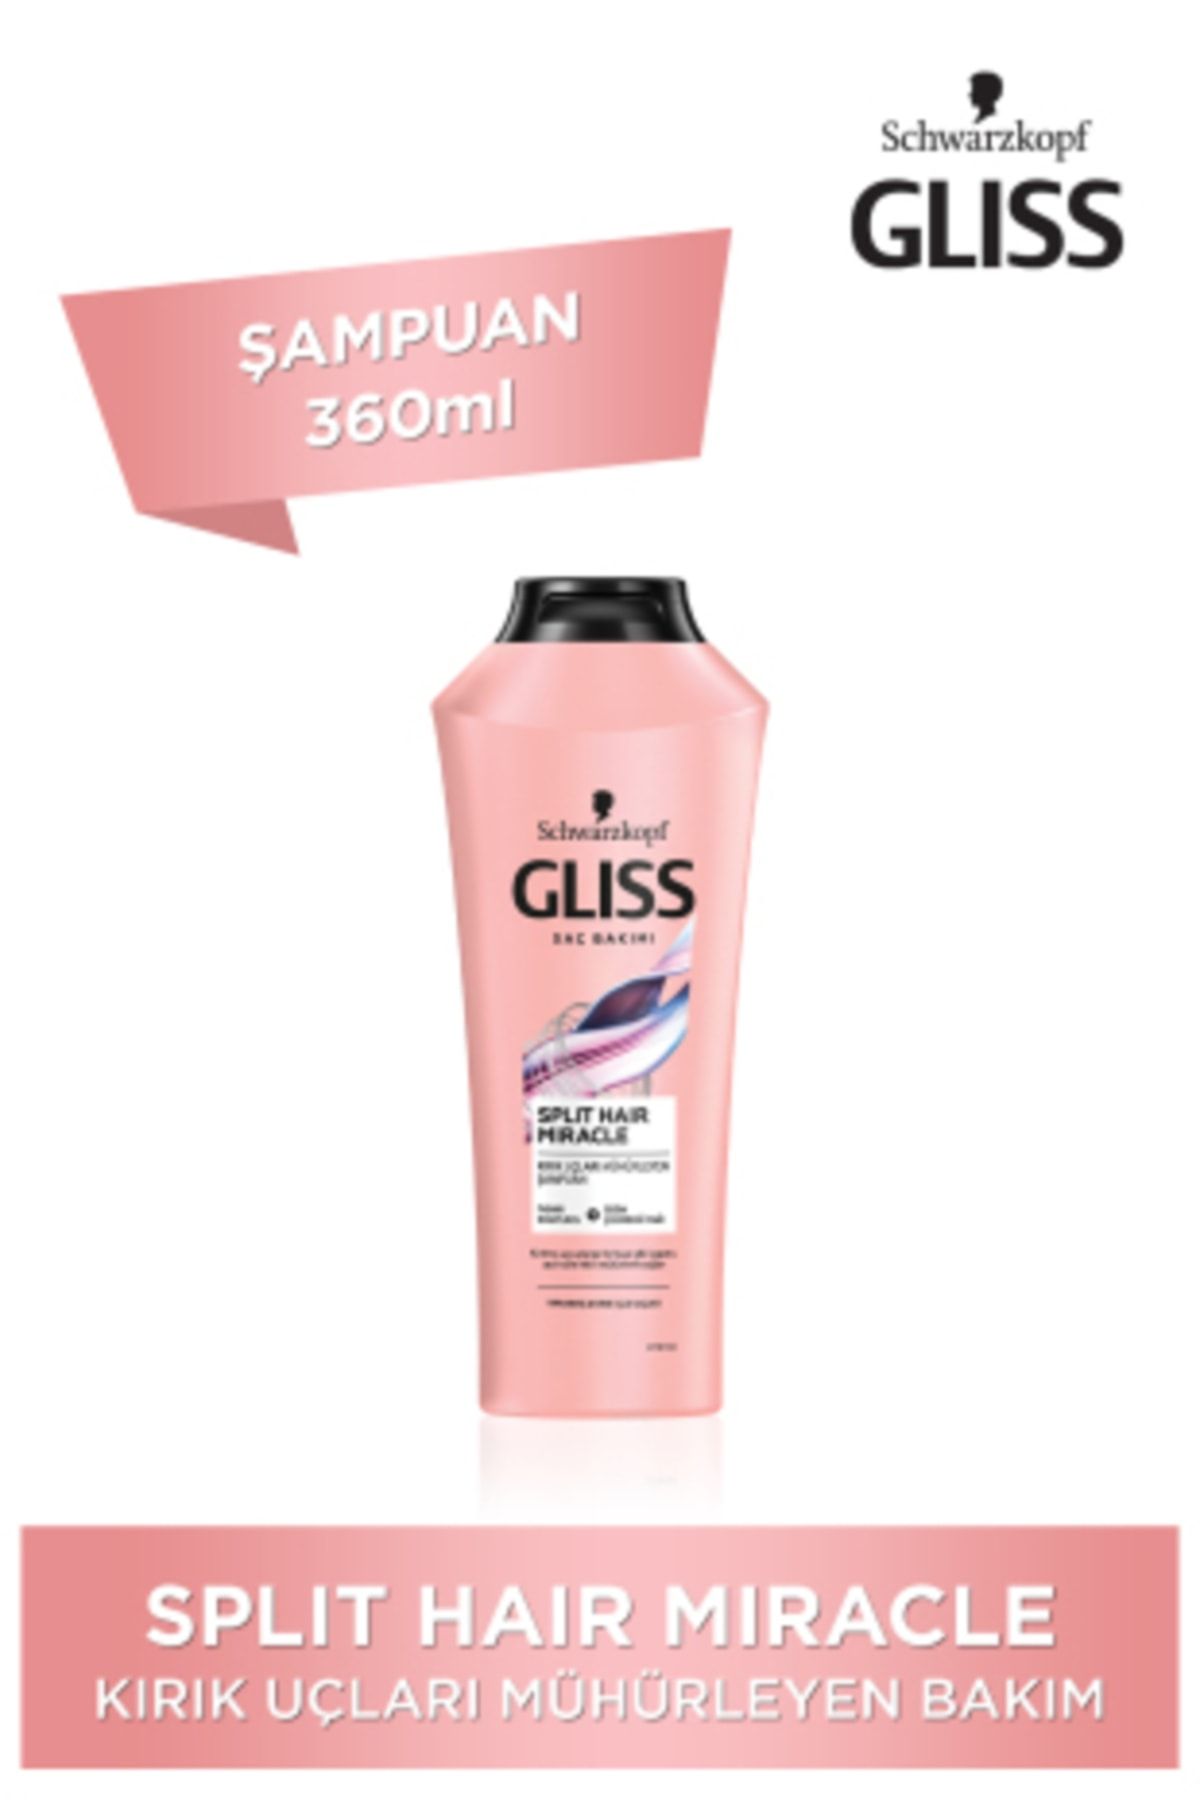 Gliss Schwarzkopf Glıss Splıt Haır Mıracle Şampuan 360 Ml